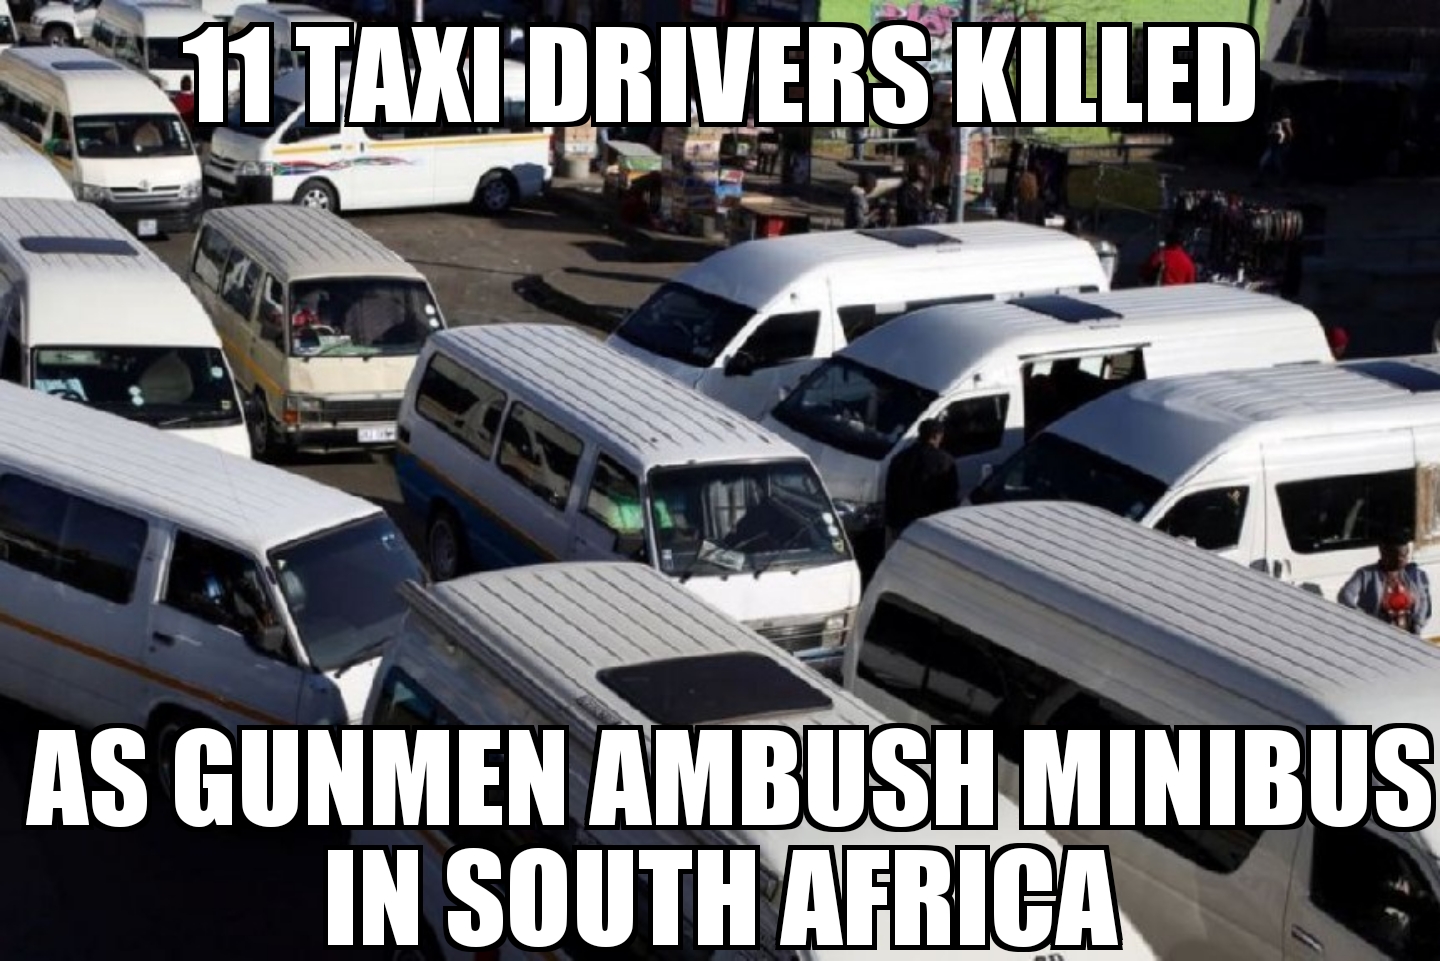 South Africa minibus ambush